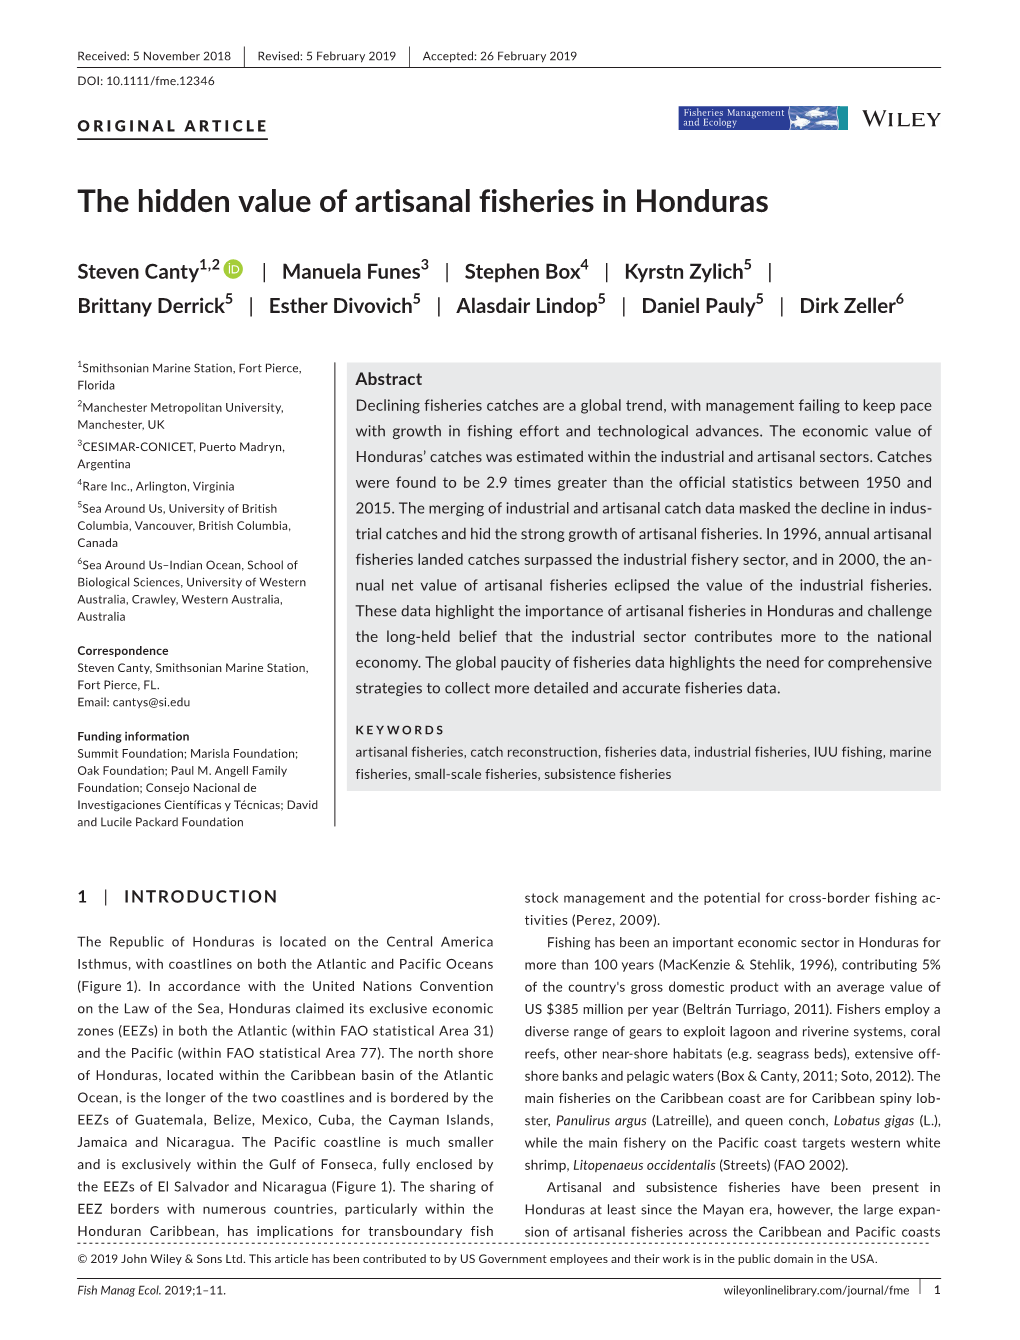 The Hidden Value of Artisanal Fisheries in Honduras